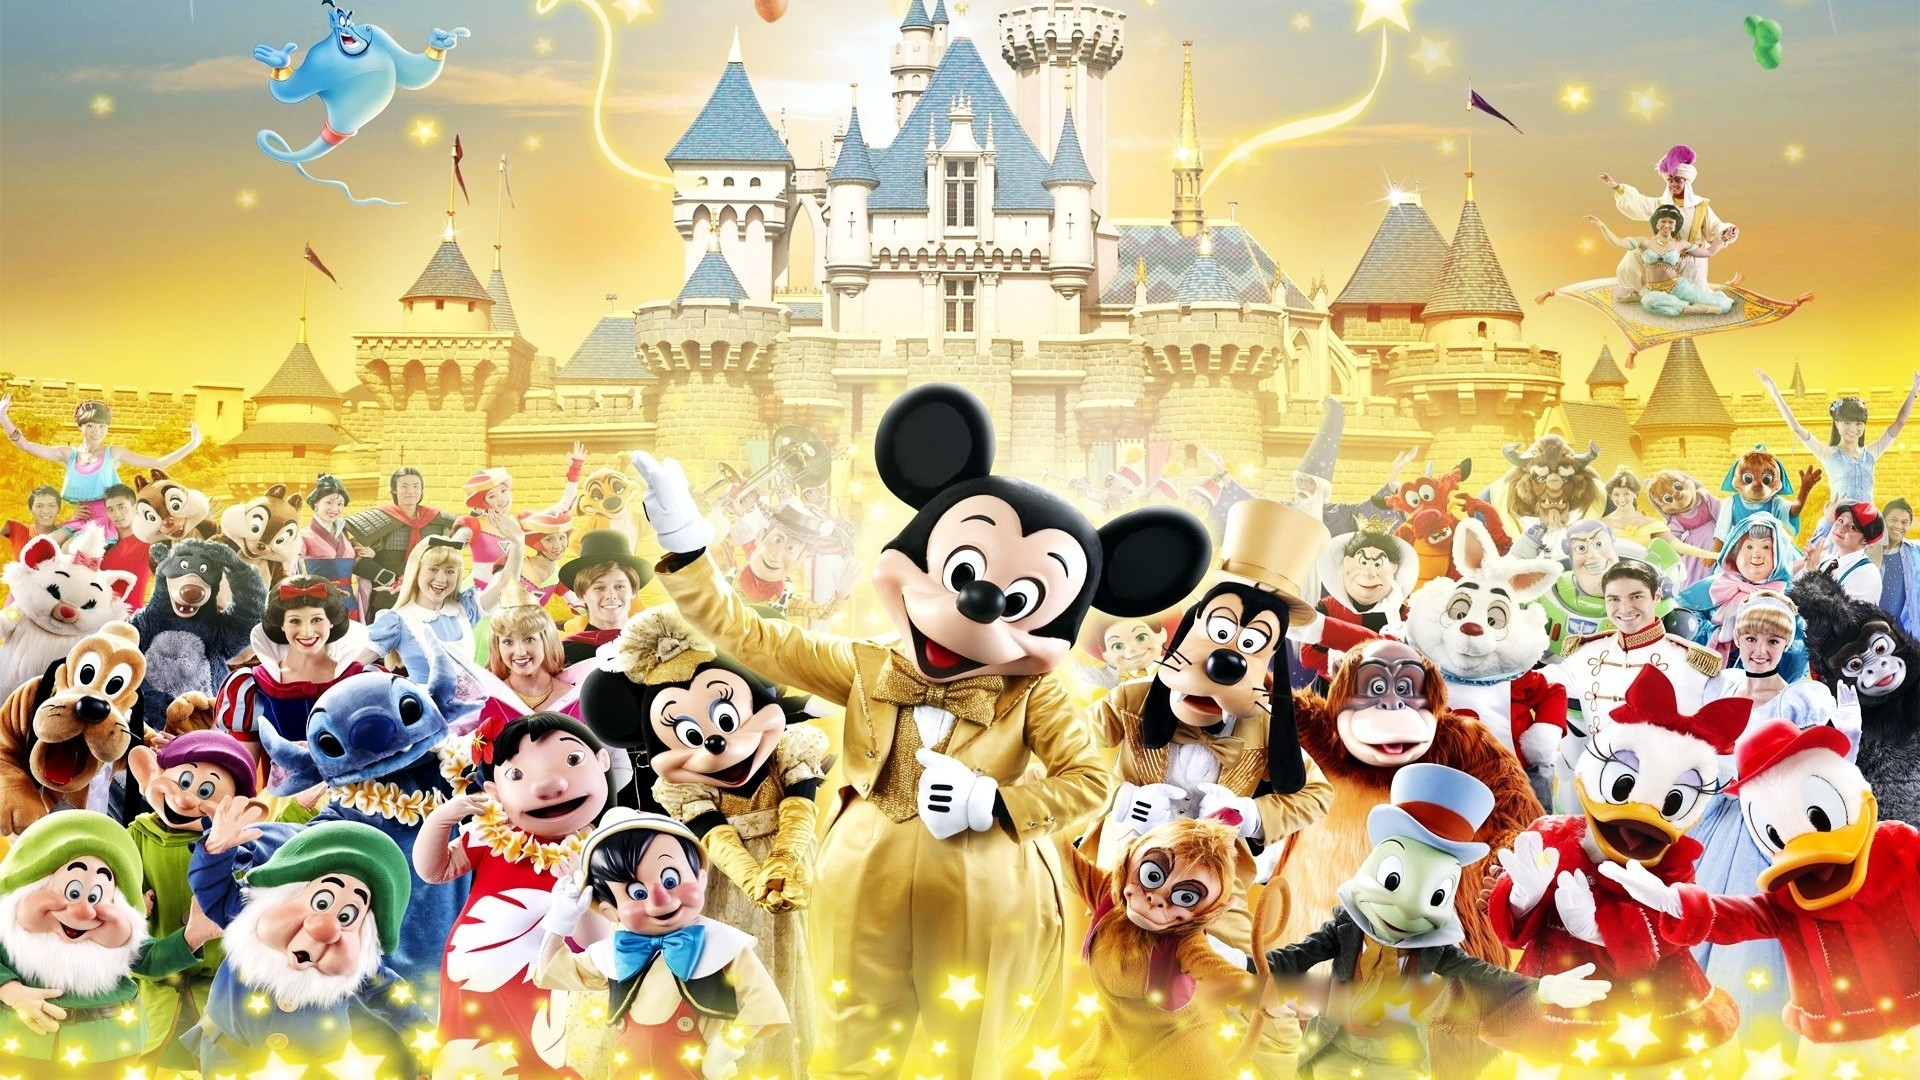 1920x1080 1152x2048 Glitter Wallpaper, Disney Wallpaper, Wallpaper Backgrounds,  Iphone Wallpapers, Iphone 3, Disney Mickey Mouse, Minnie Mouse, Walt Disney,  ...